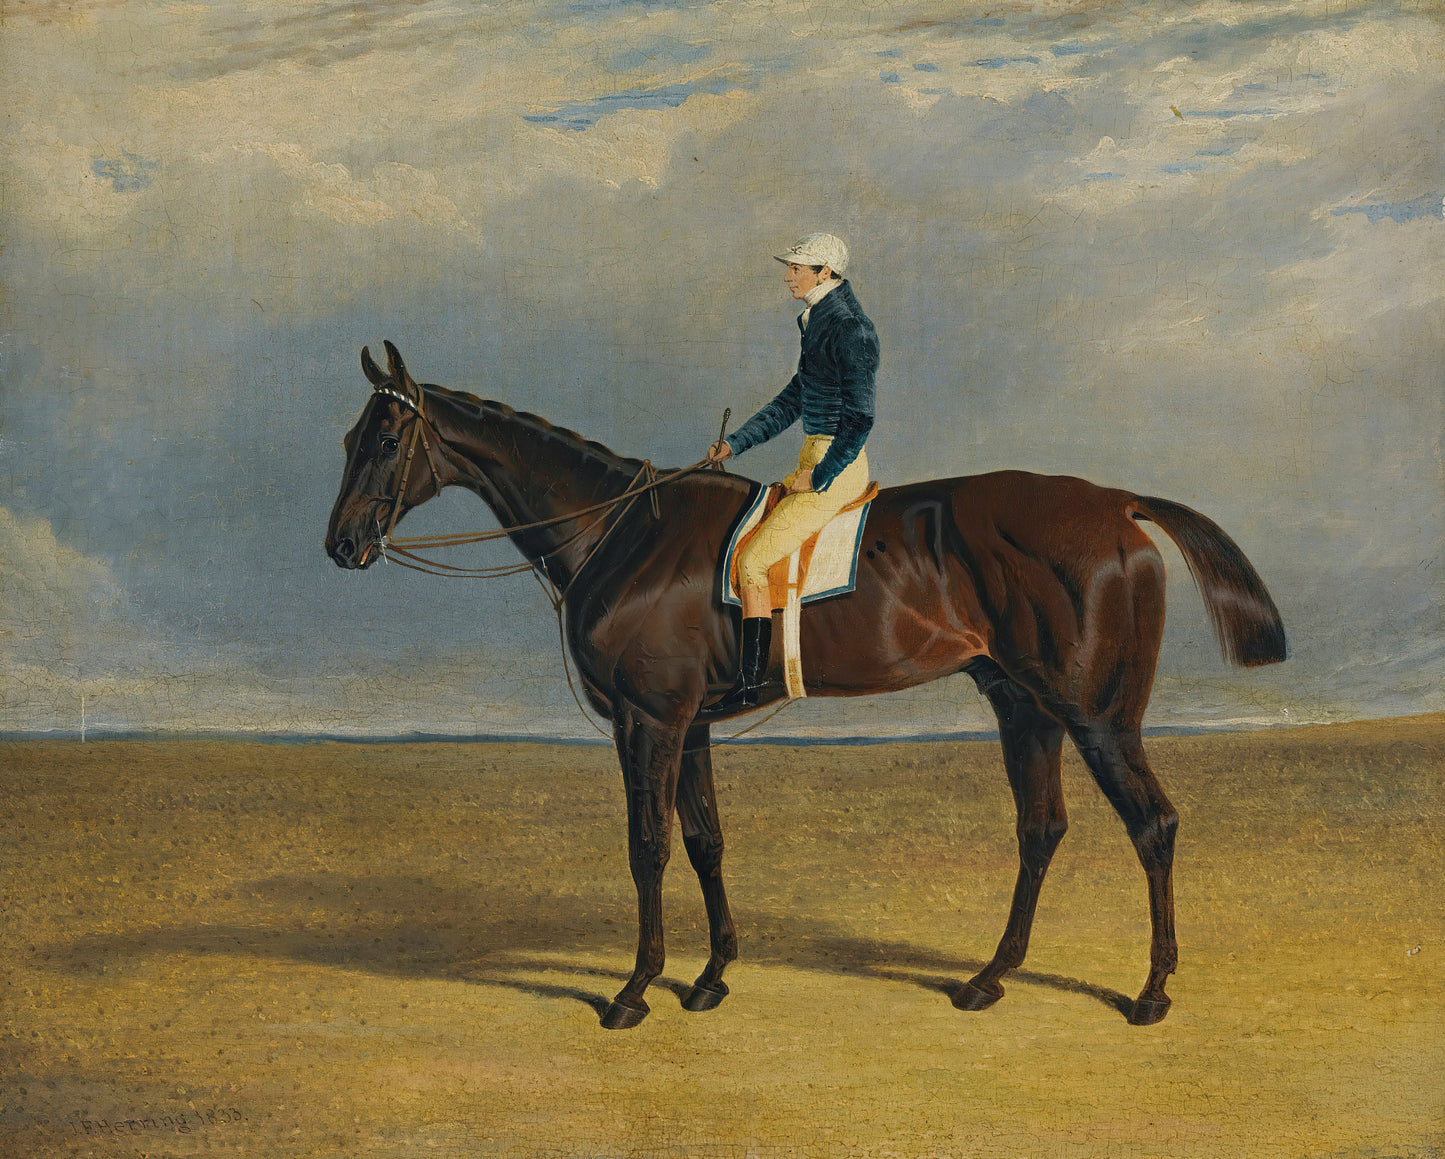 John Frederick Herring Vintage Race & Show Horses [37 Images]